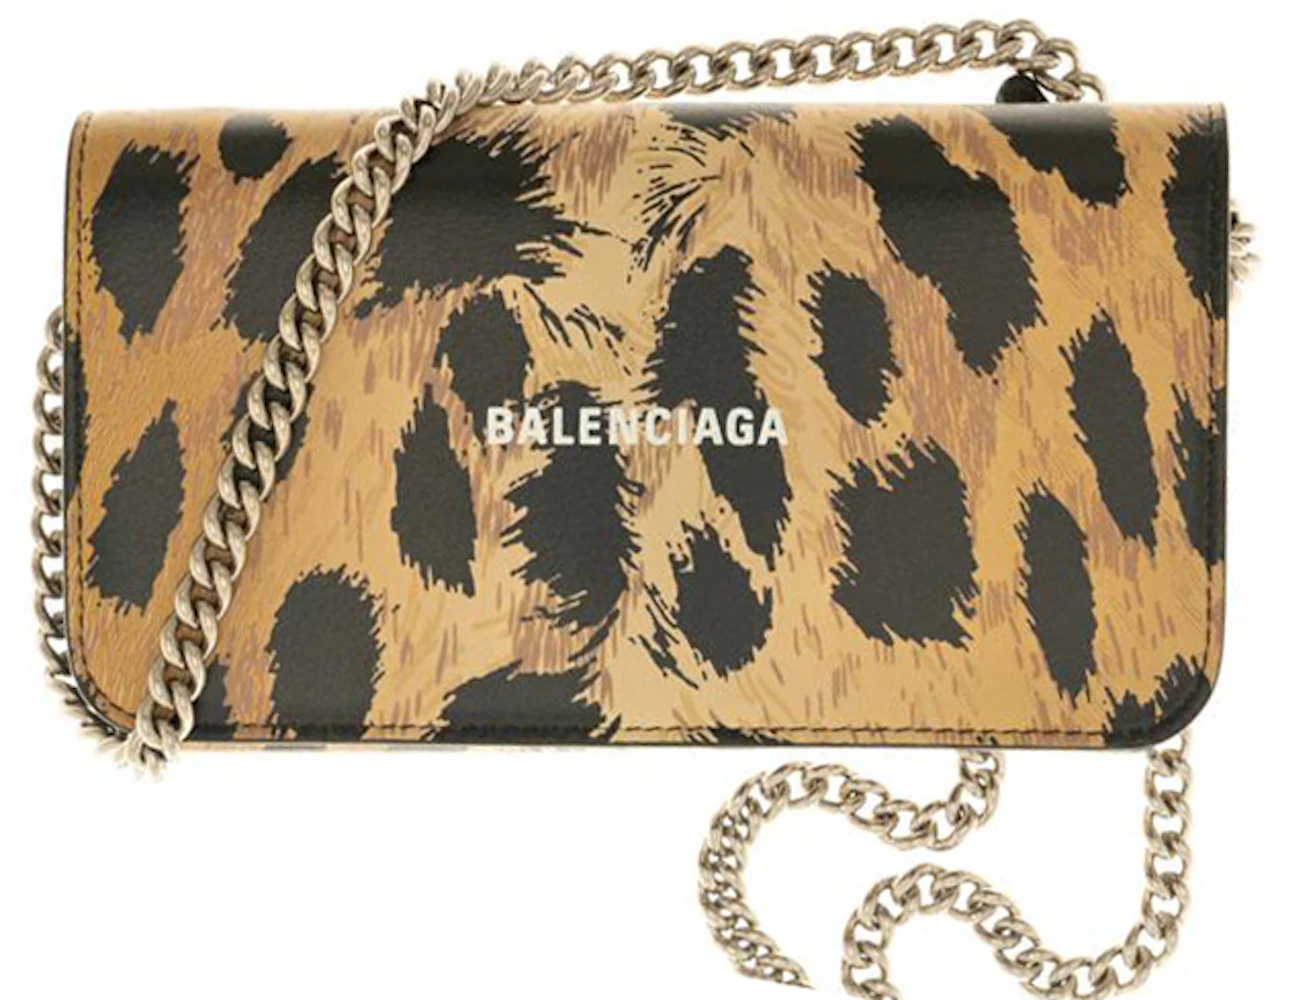 Leopard flap purse